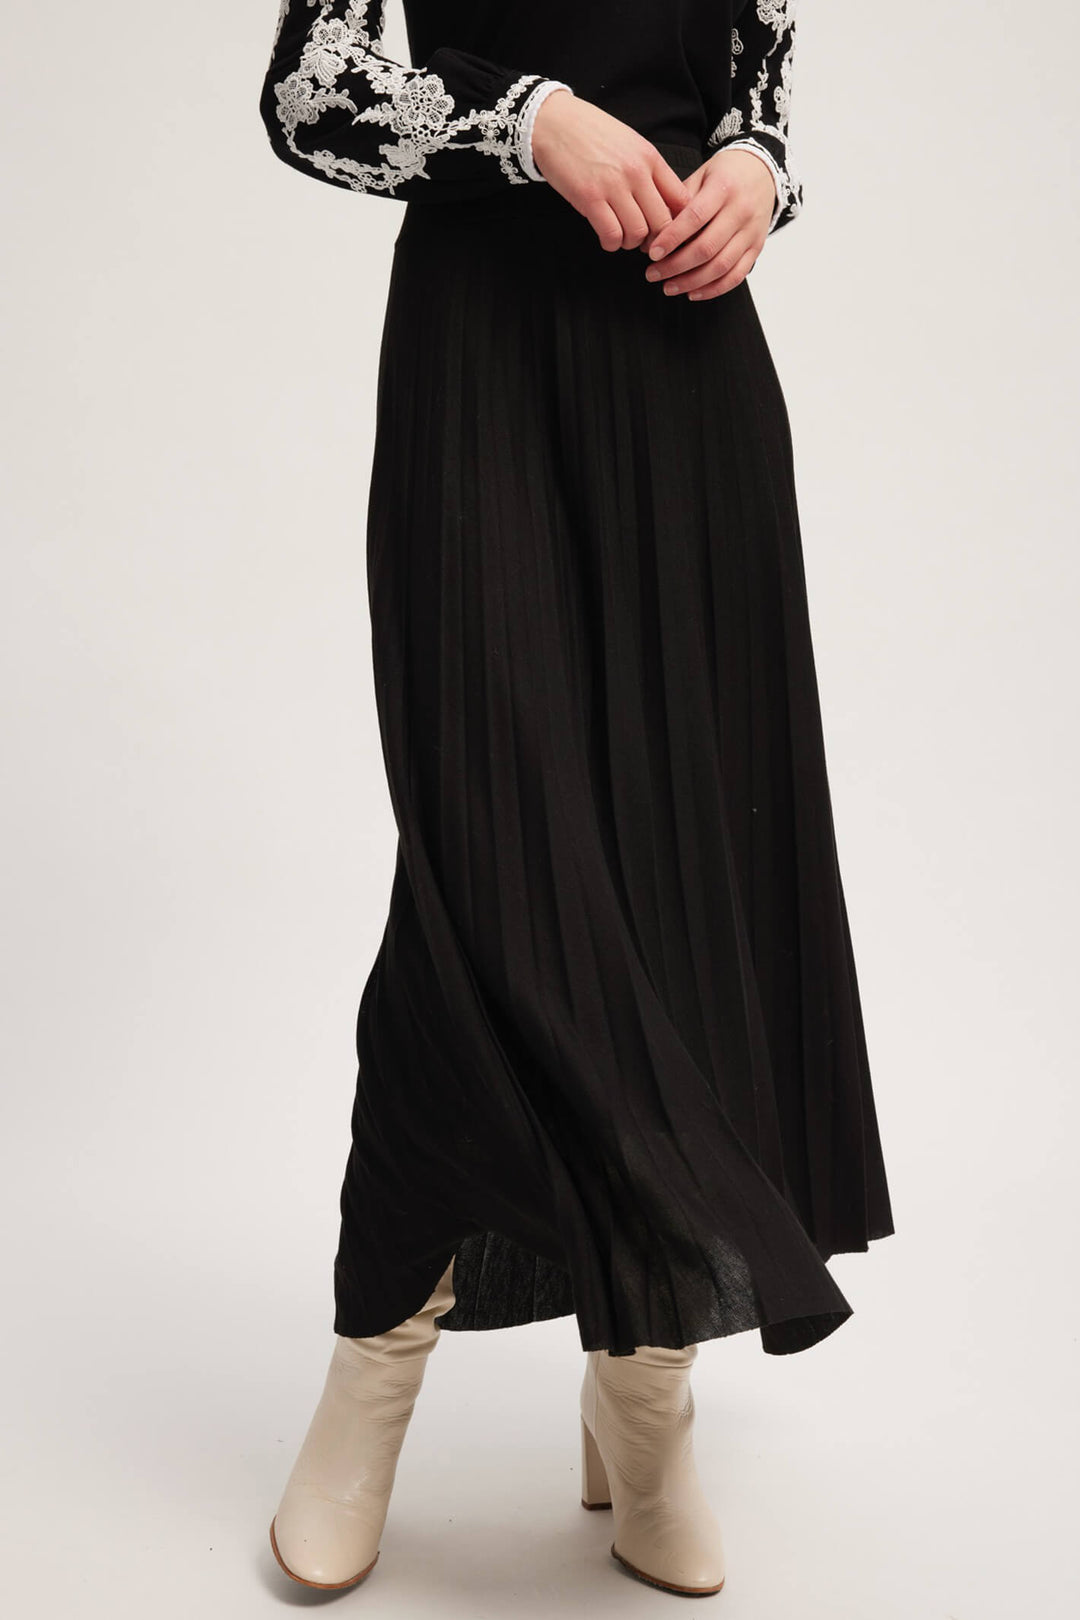 Leo & Ugo EHJ001 Black Pleated Maxi Skirt - Experience Boutique